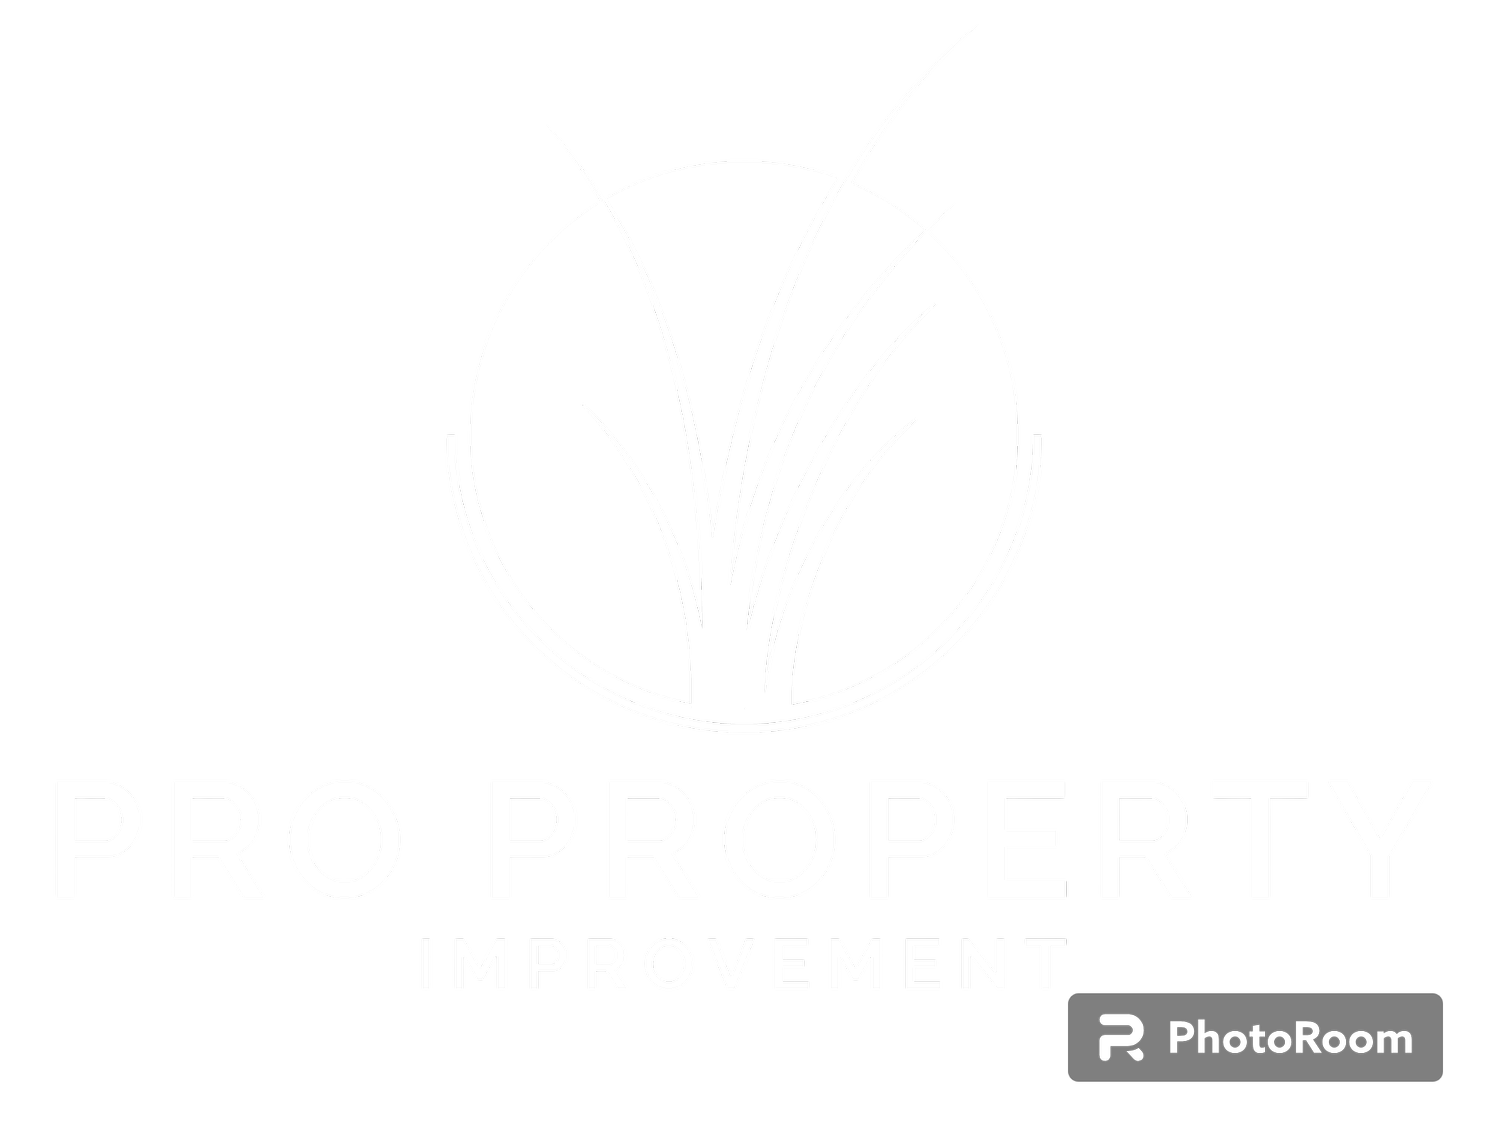 Pro Property Improvement